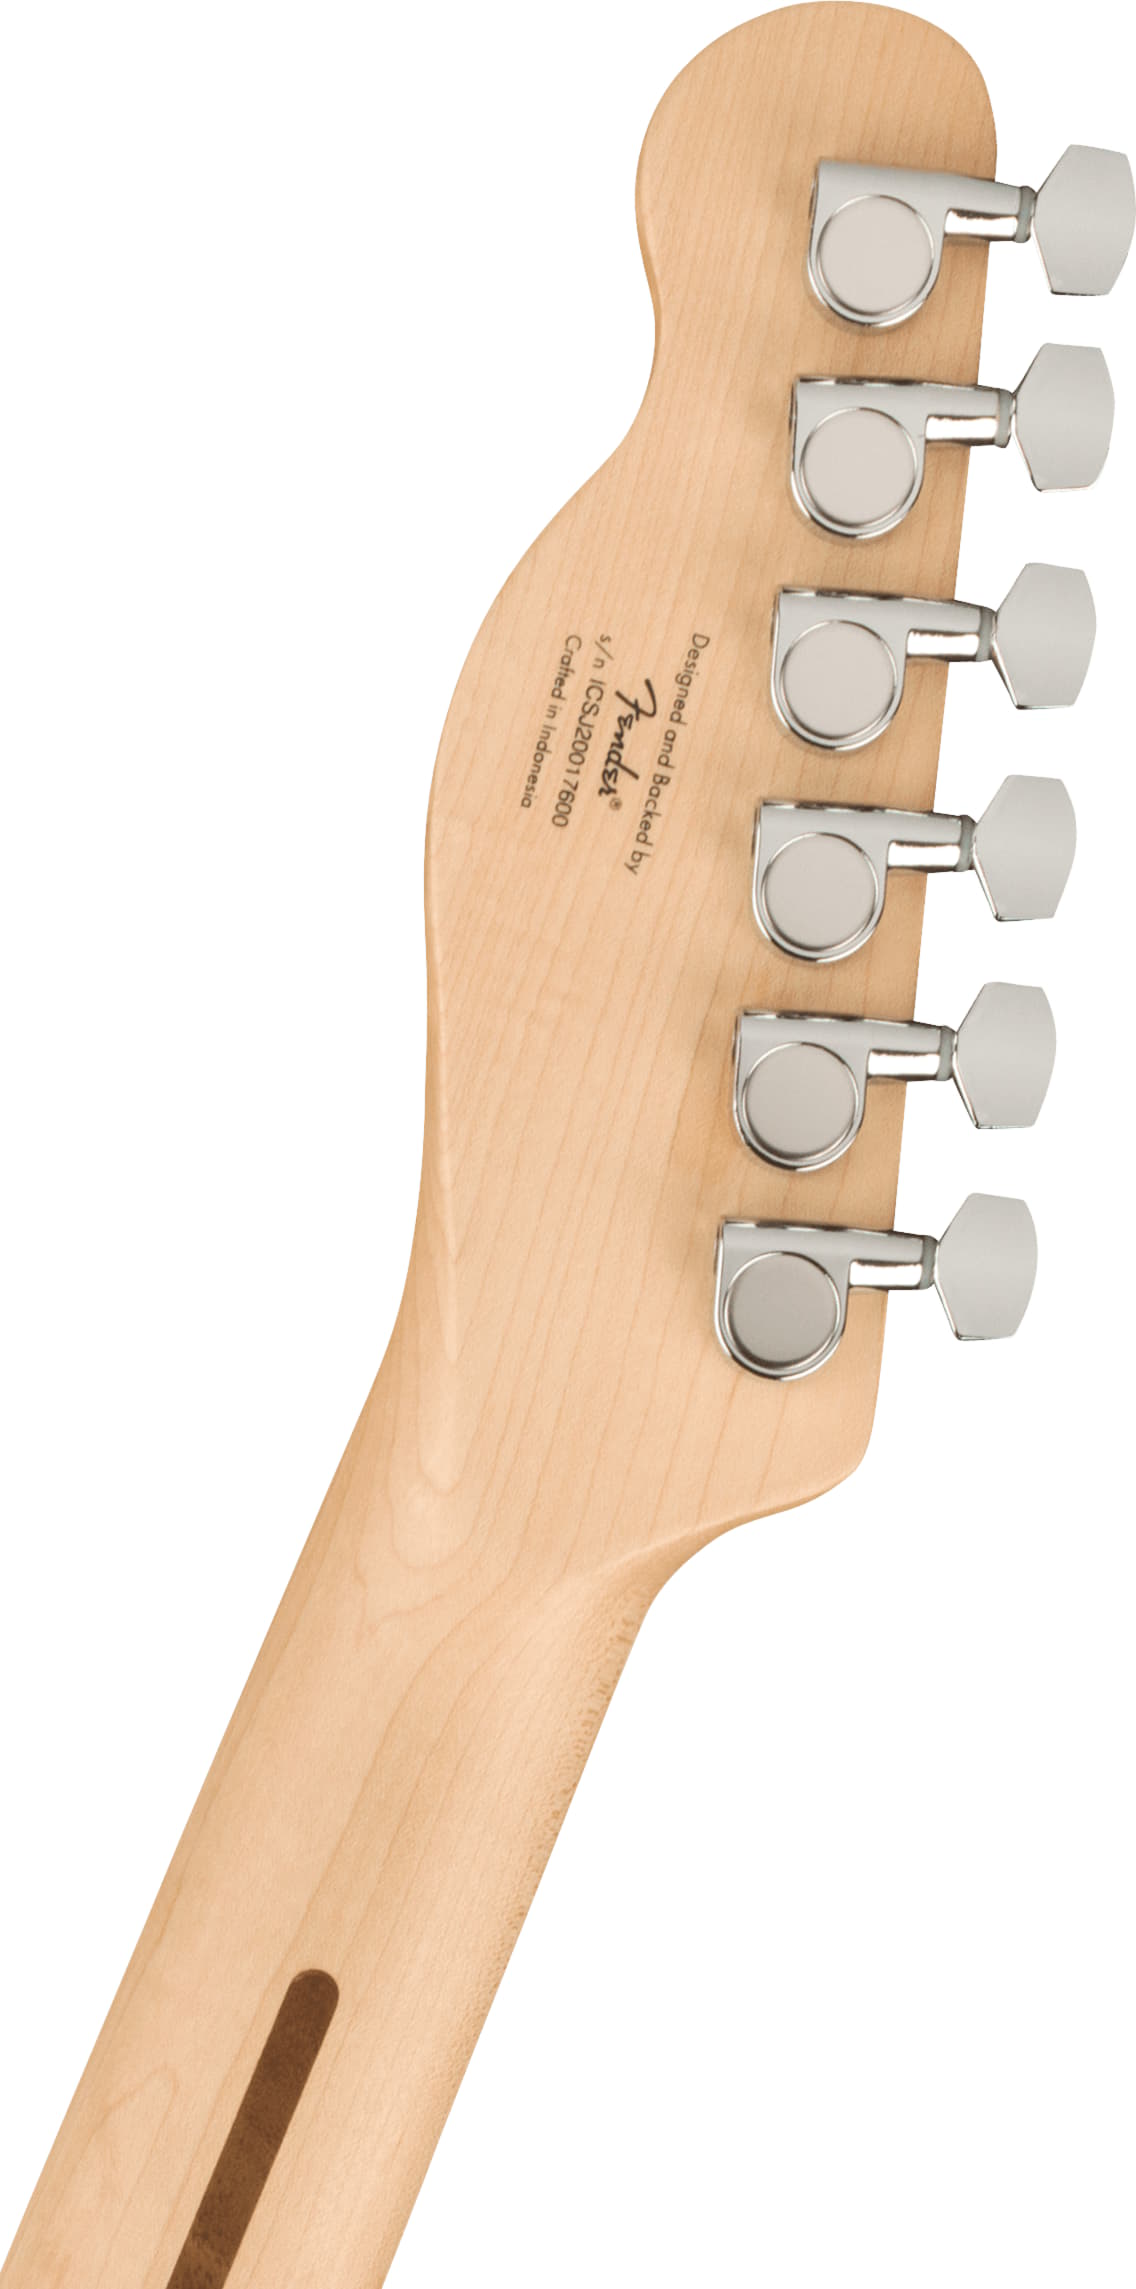 Fender Squier Affinity 2021 Telecaster MN Butterscotch Blonde по цене 35 000 ₽